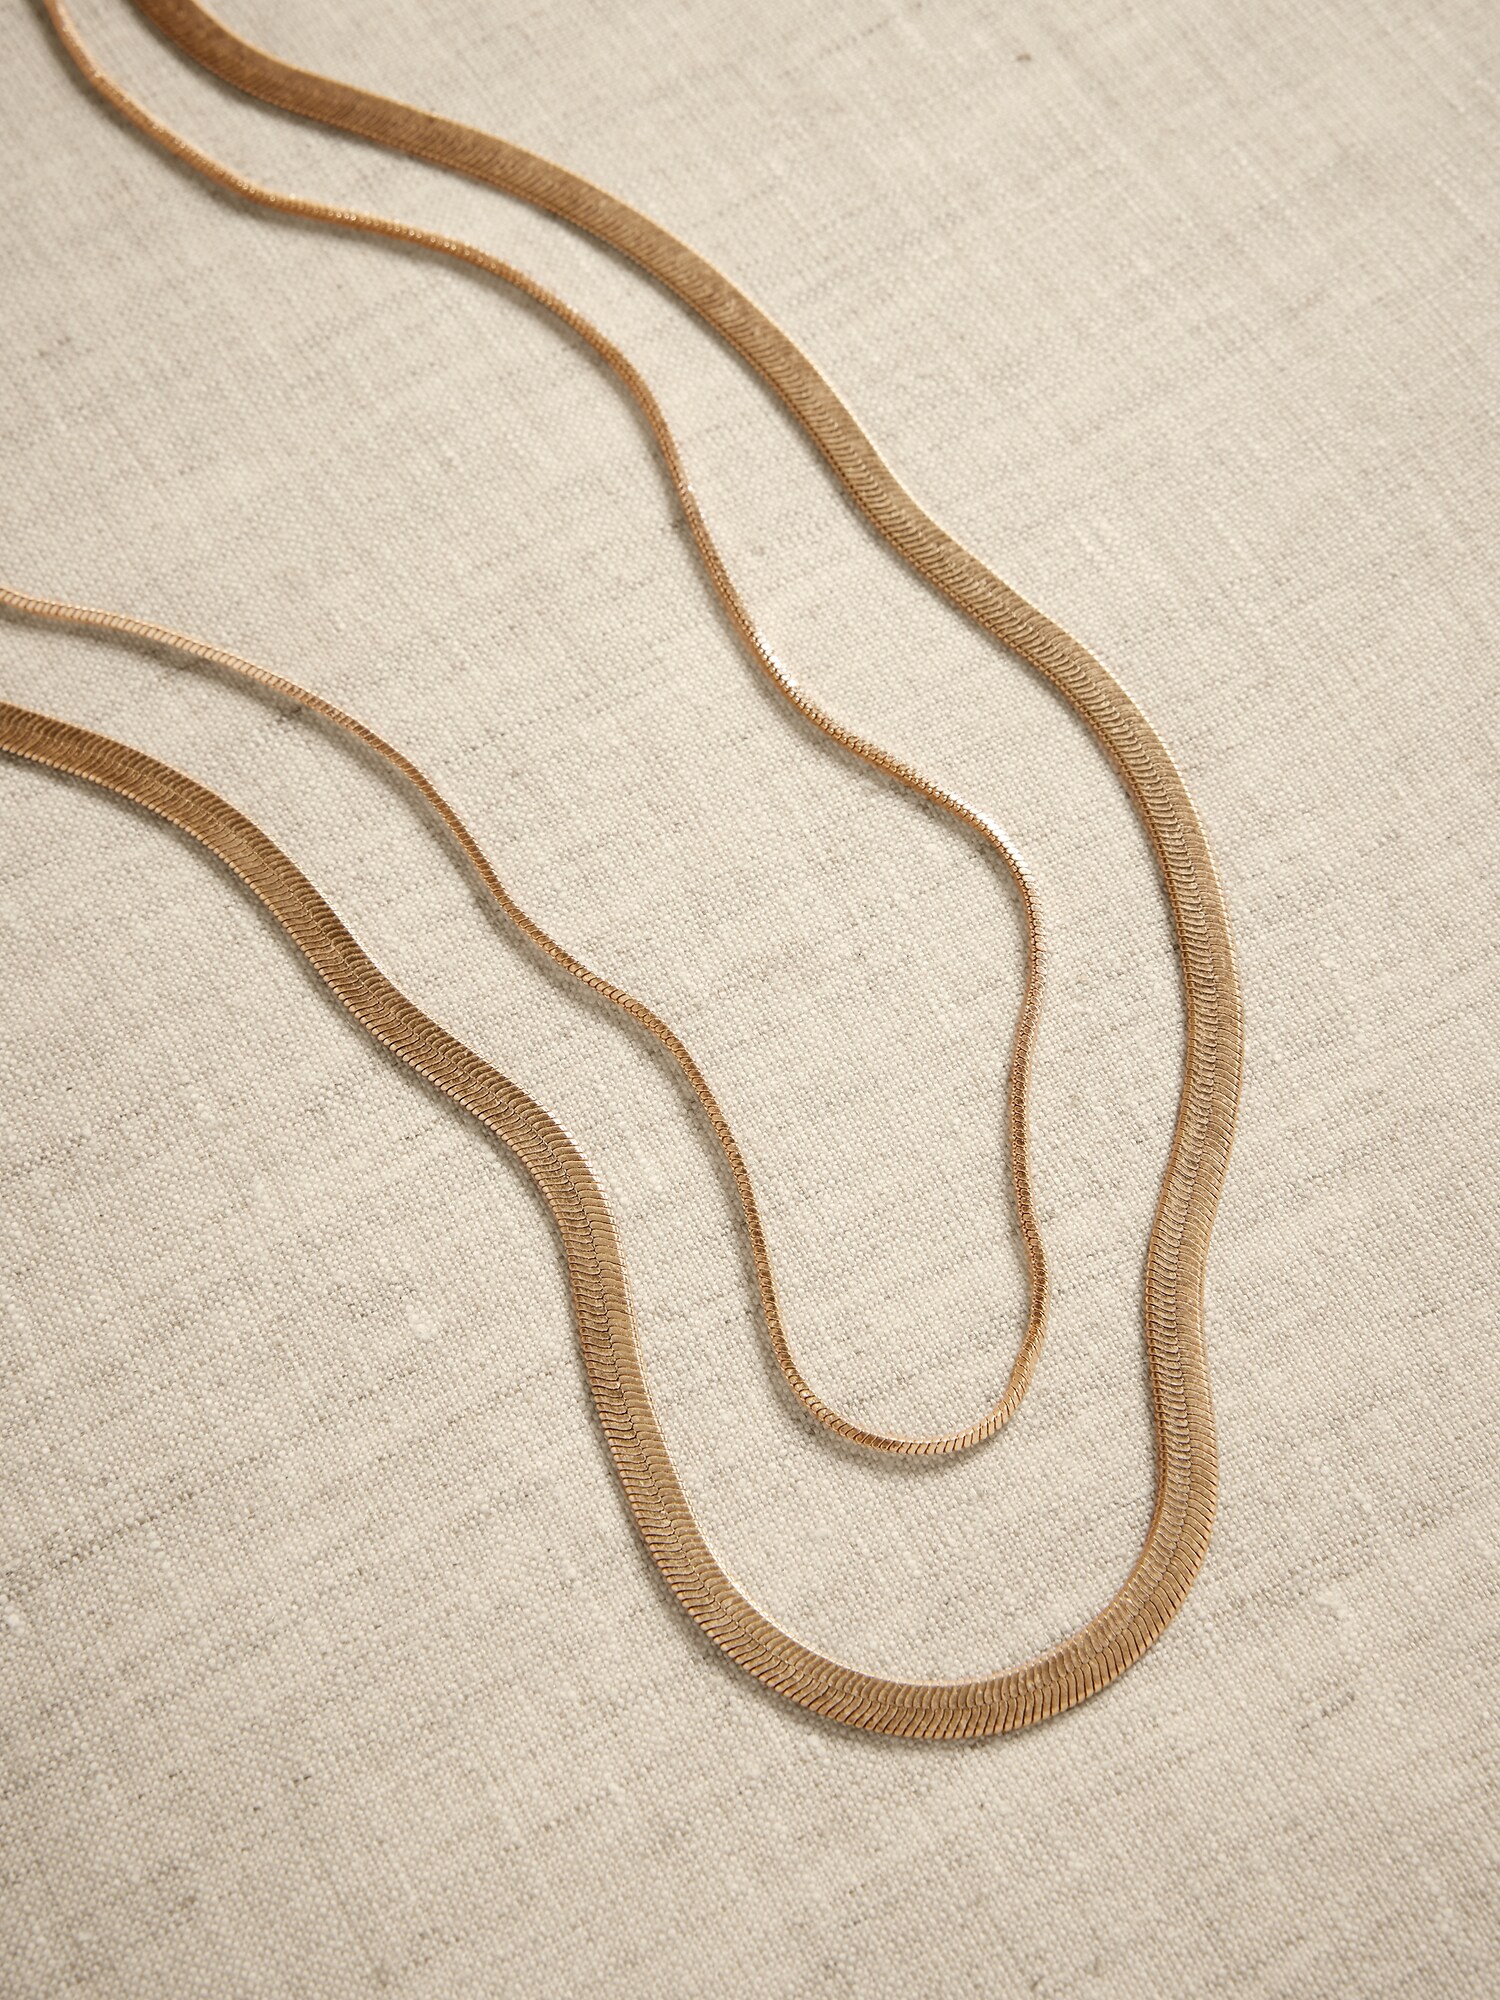 Tubular Snake Chain Necklace